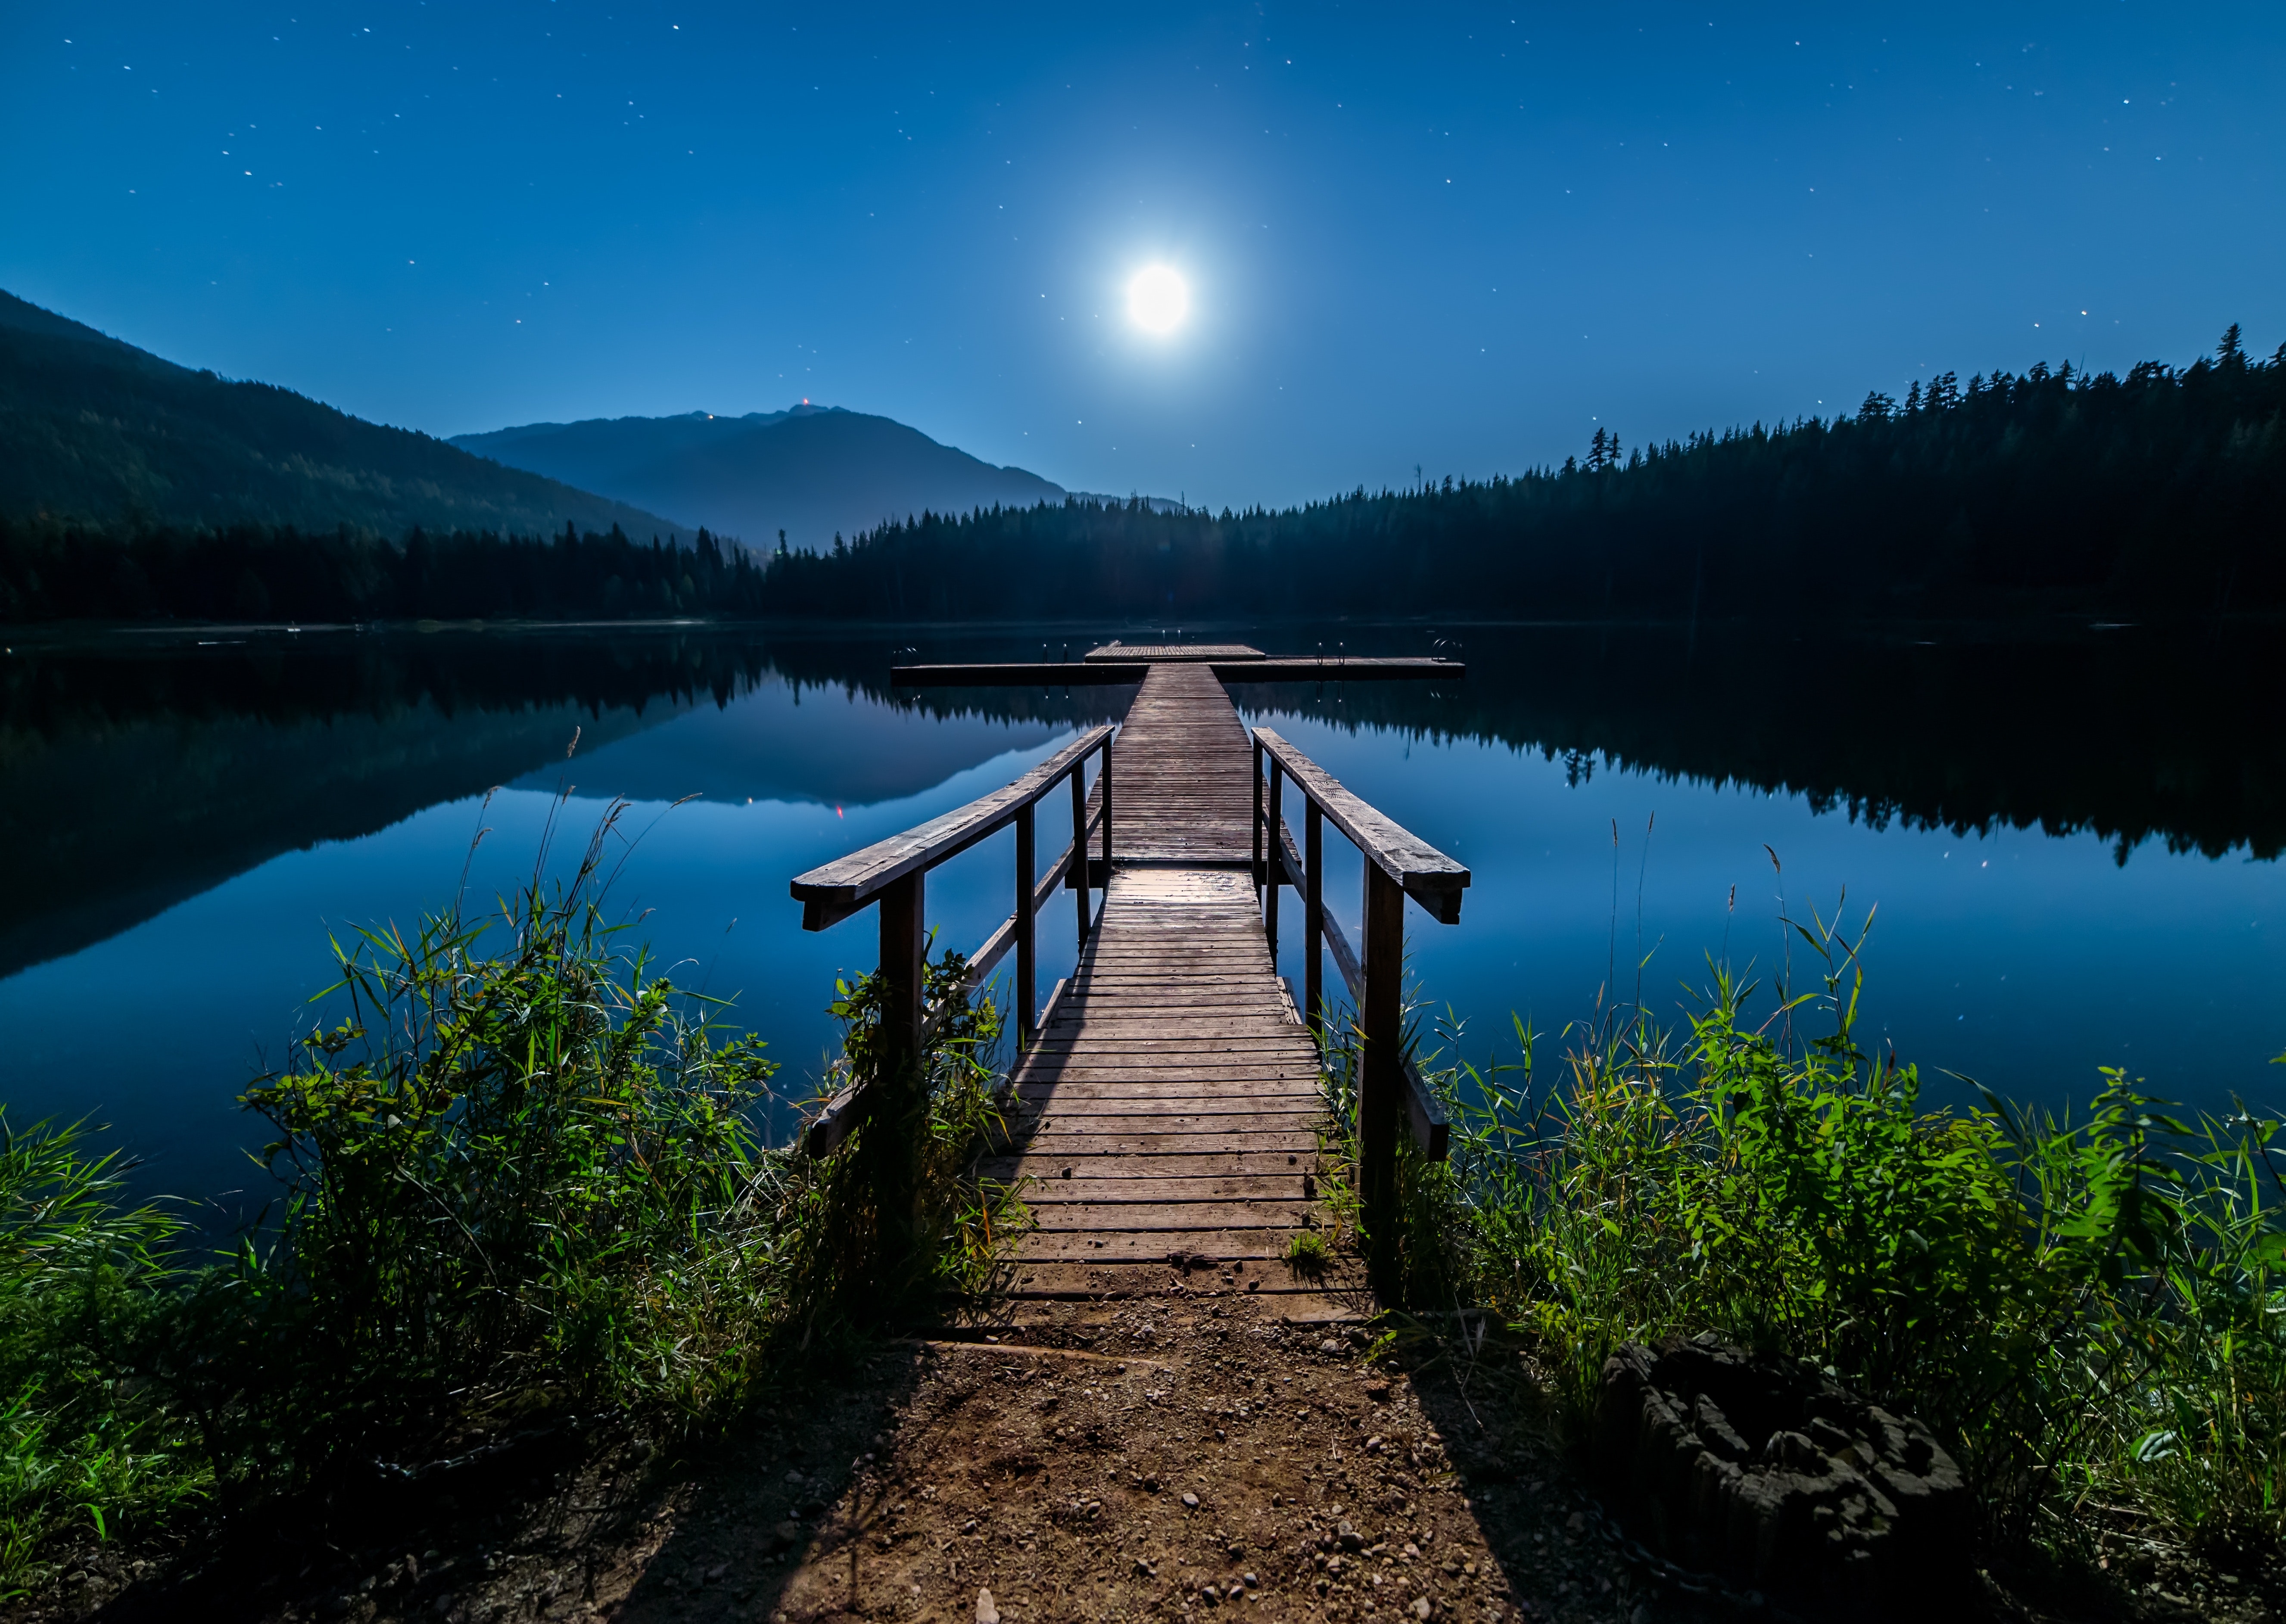 30+ Great Moonlight Photos · Pexels · Free Stock Photos